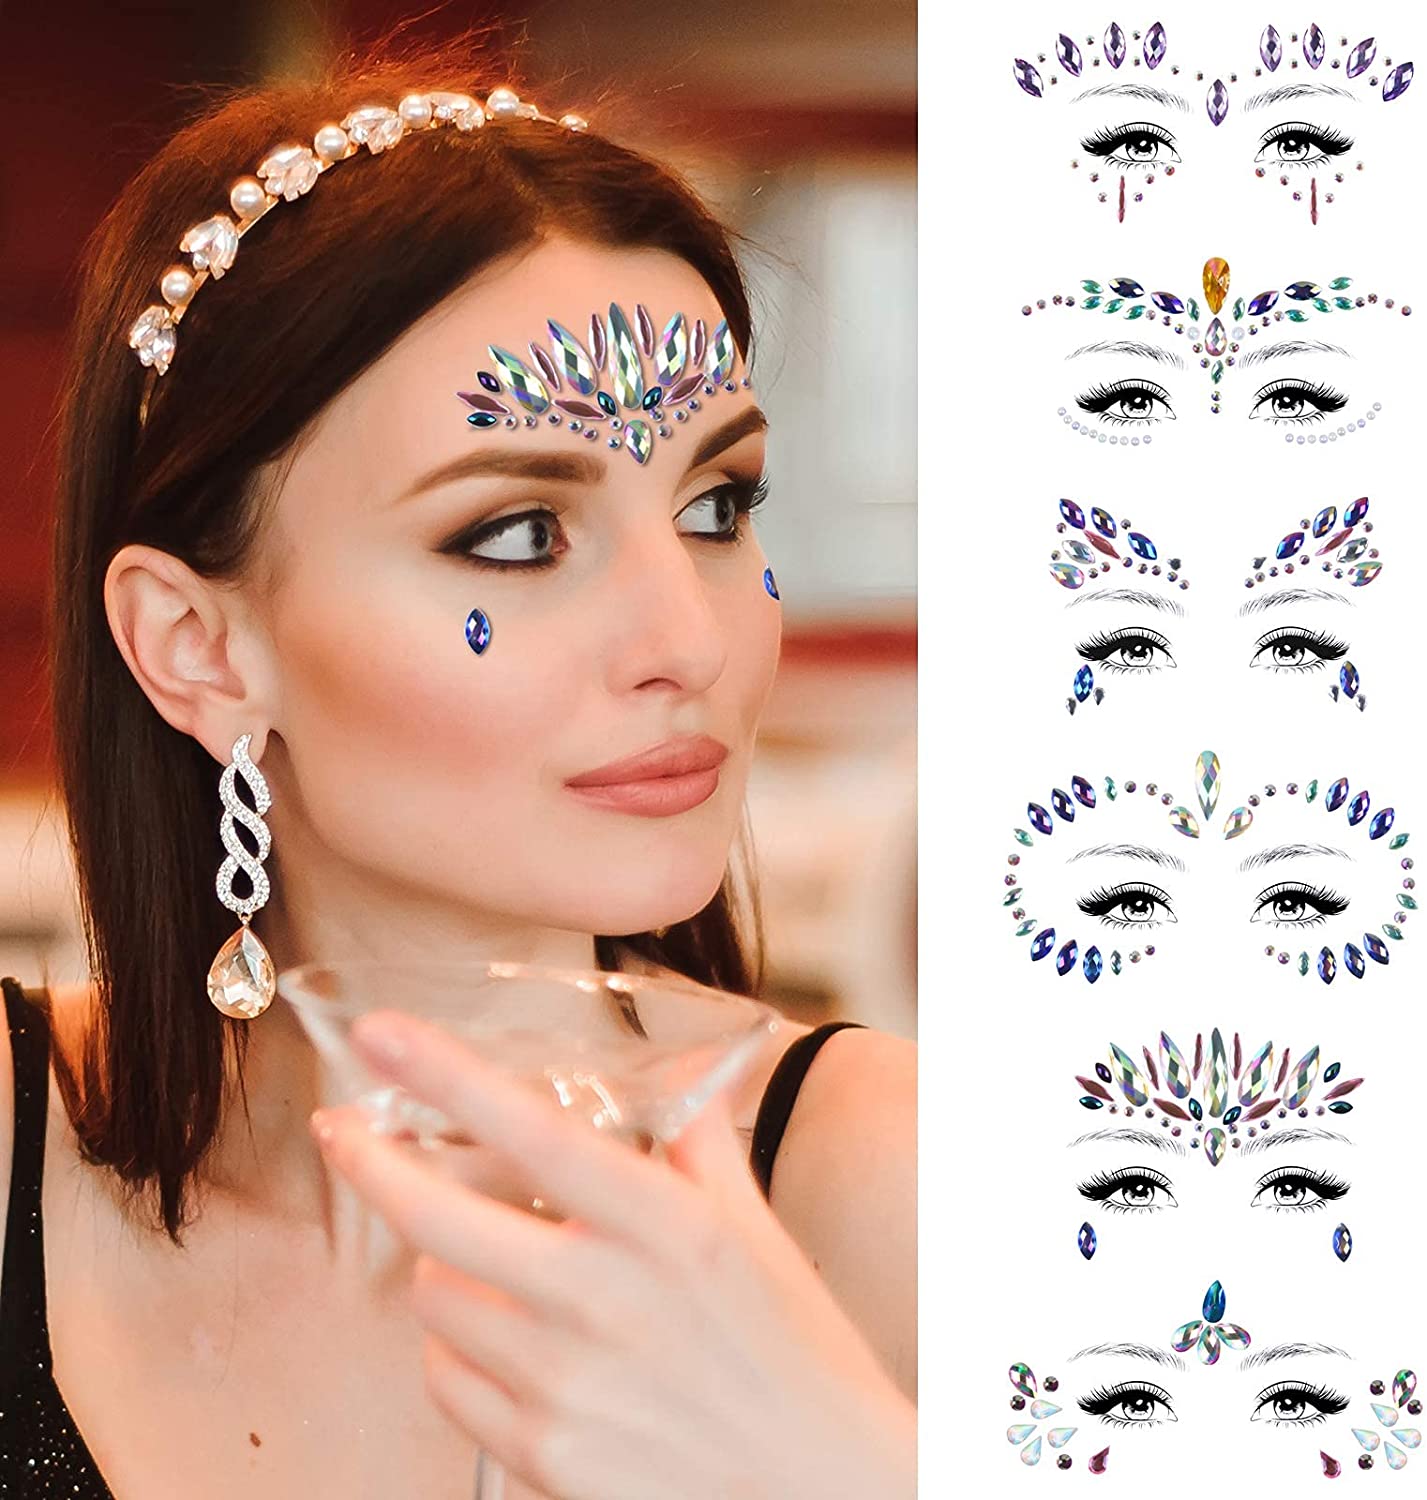 100% Original Factory Rhinestone Face Jewels - Face eye artist paste face painting makeup jewels party makeup gems – Youlian